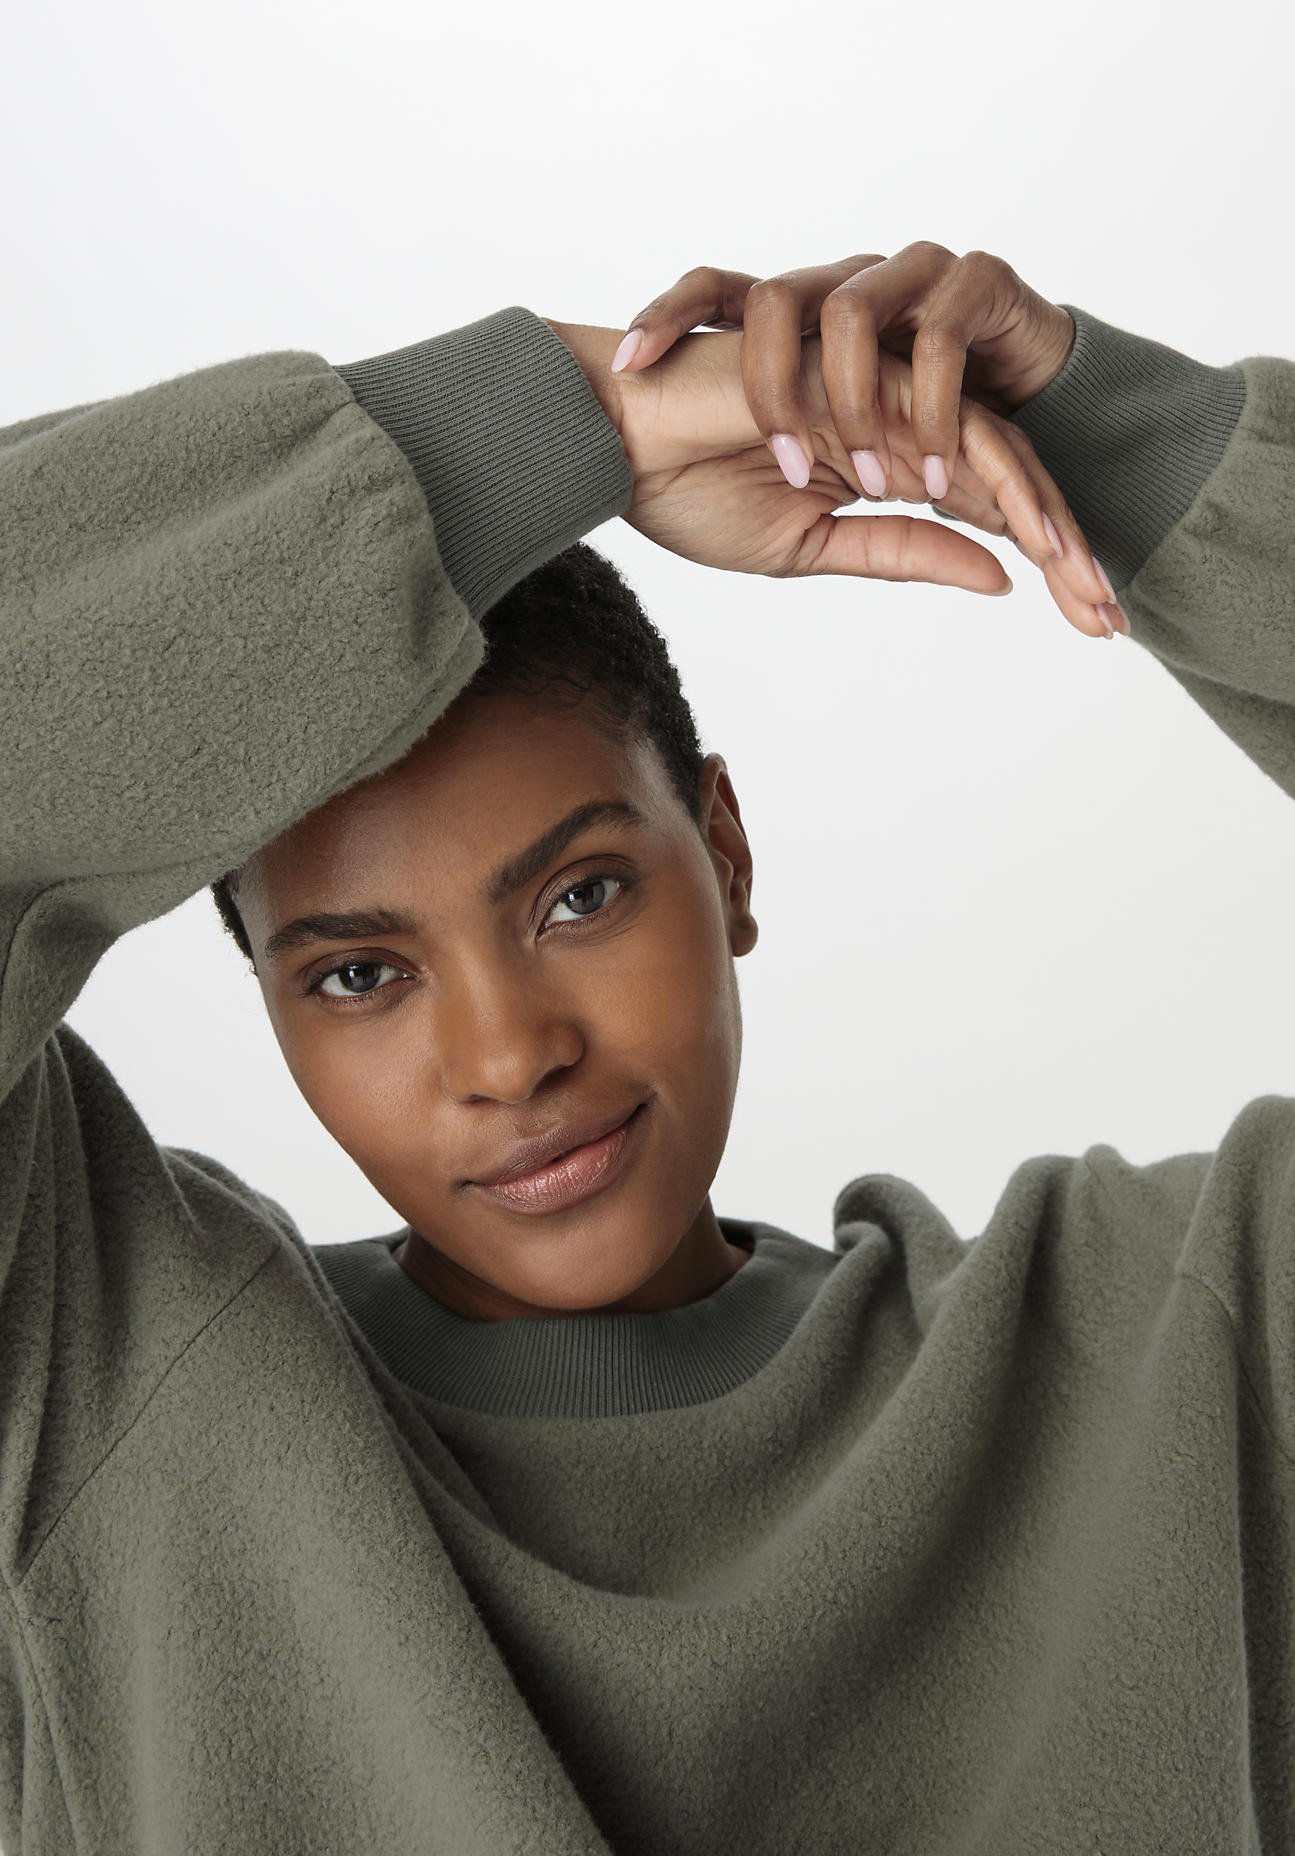 hessnatur Loungewear Fleece Sweatshirt Relaxed ACTIVE LIGHT aus Bio-Baumwolle - grün - Größe 38